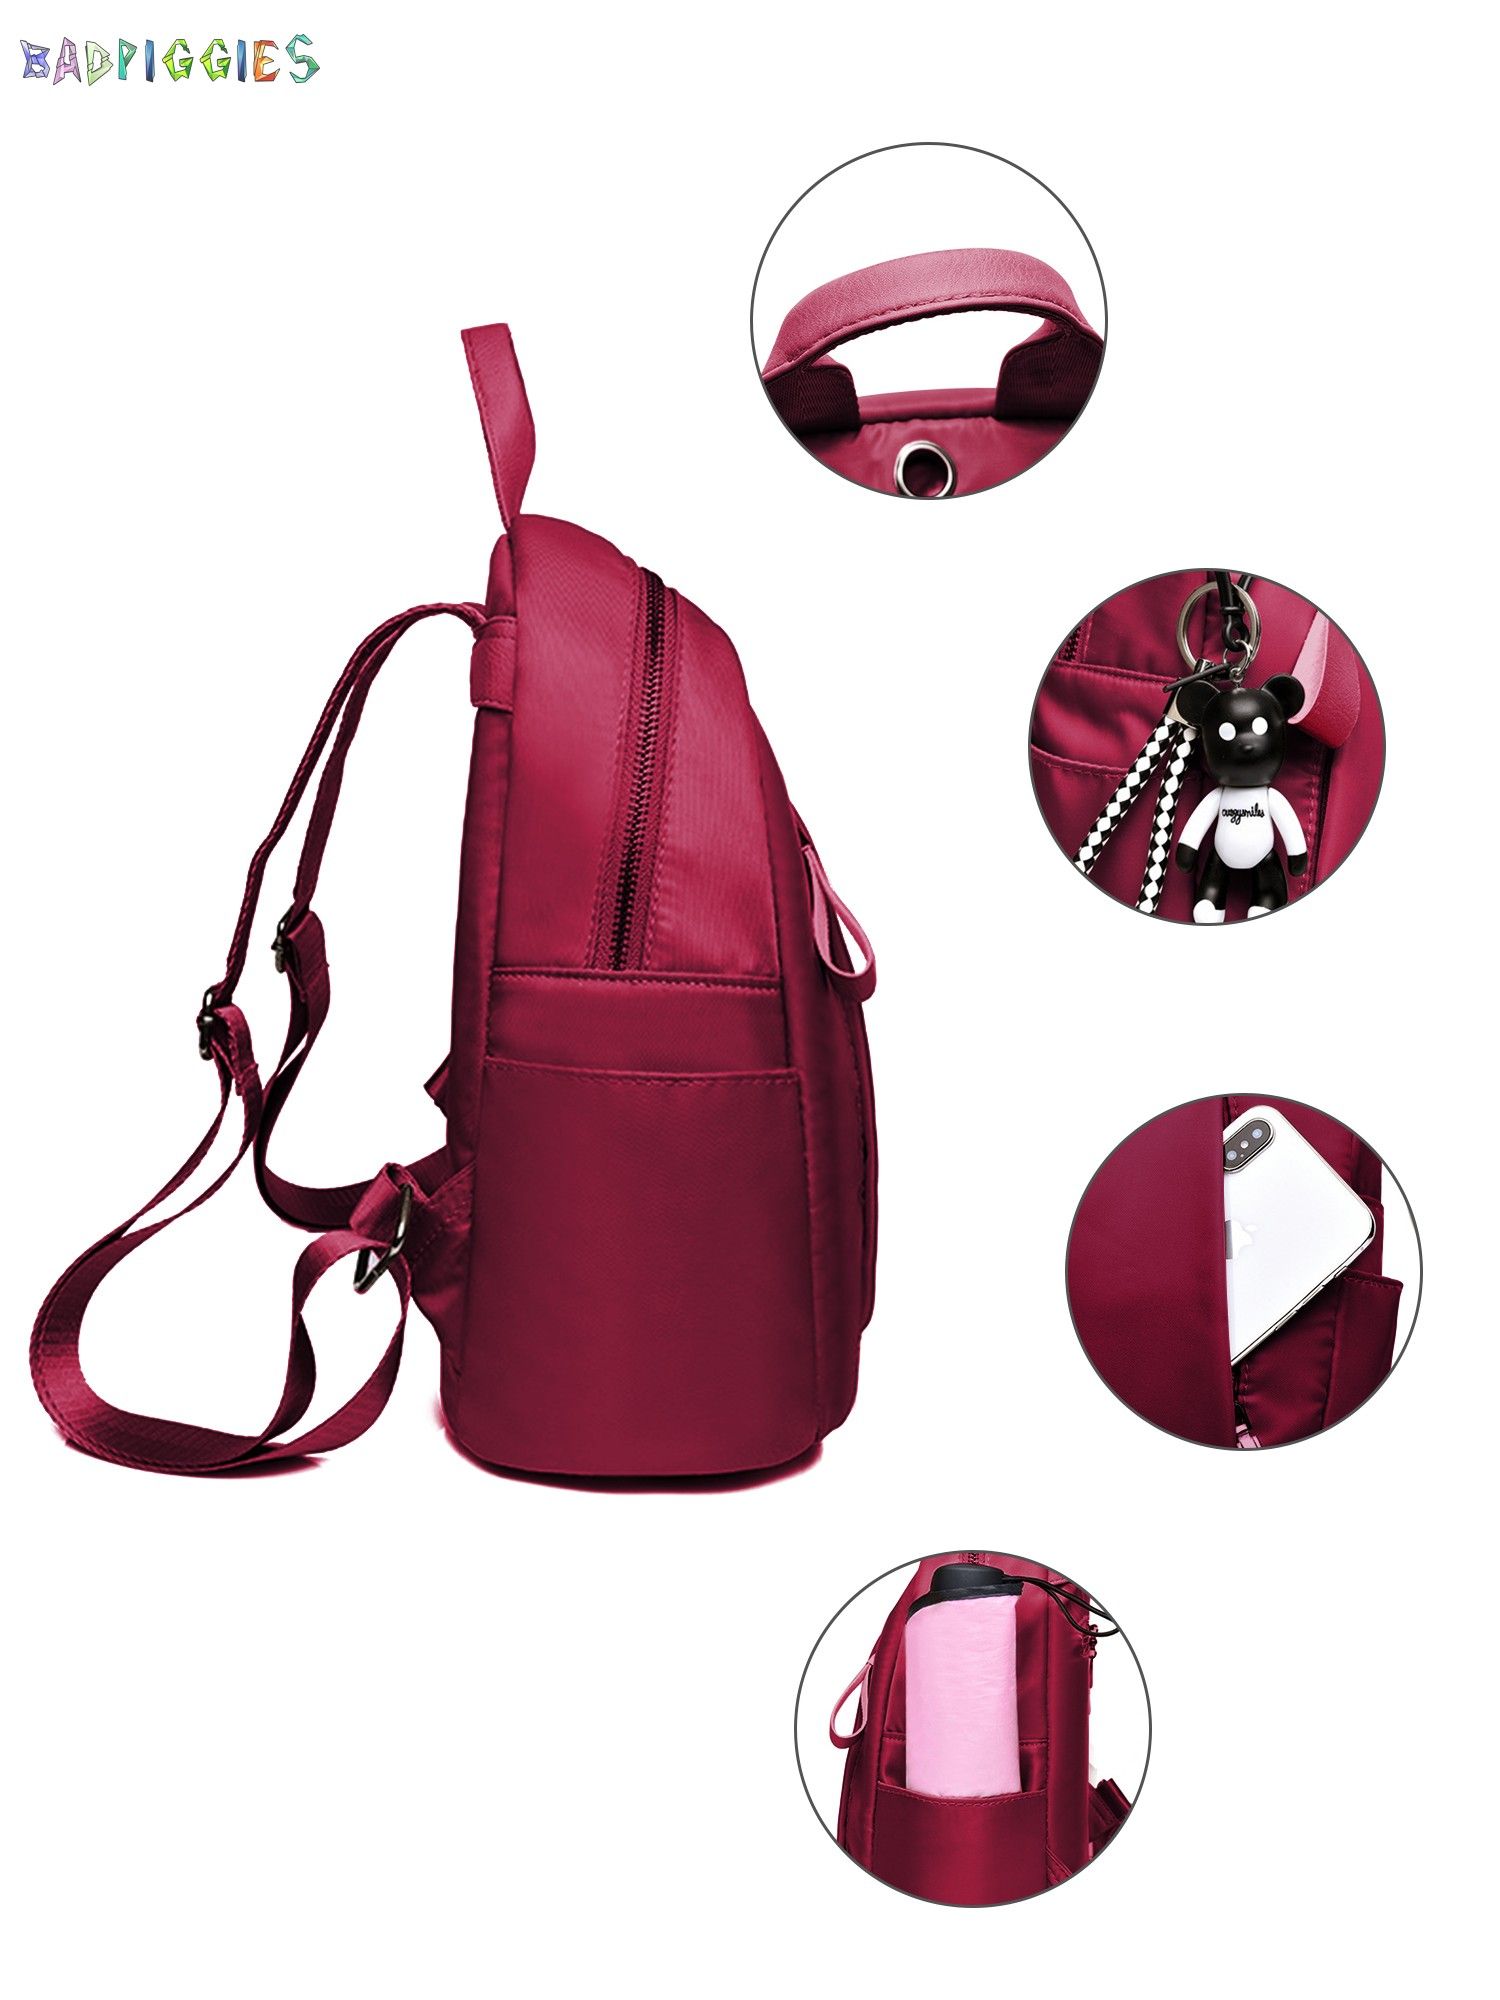 BadPiggies Women Backpack Waterproof Oxford Handbag Shoulder Travel Bag School Bag Anti-theft Rucksack - image 5 of 11